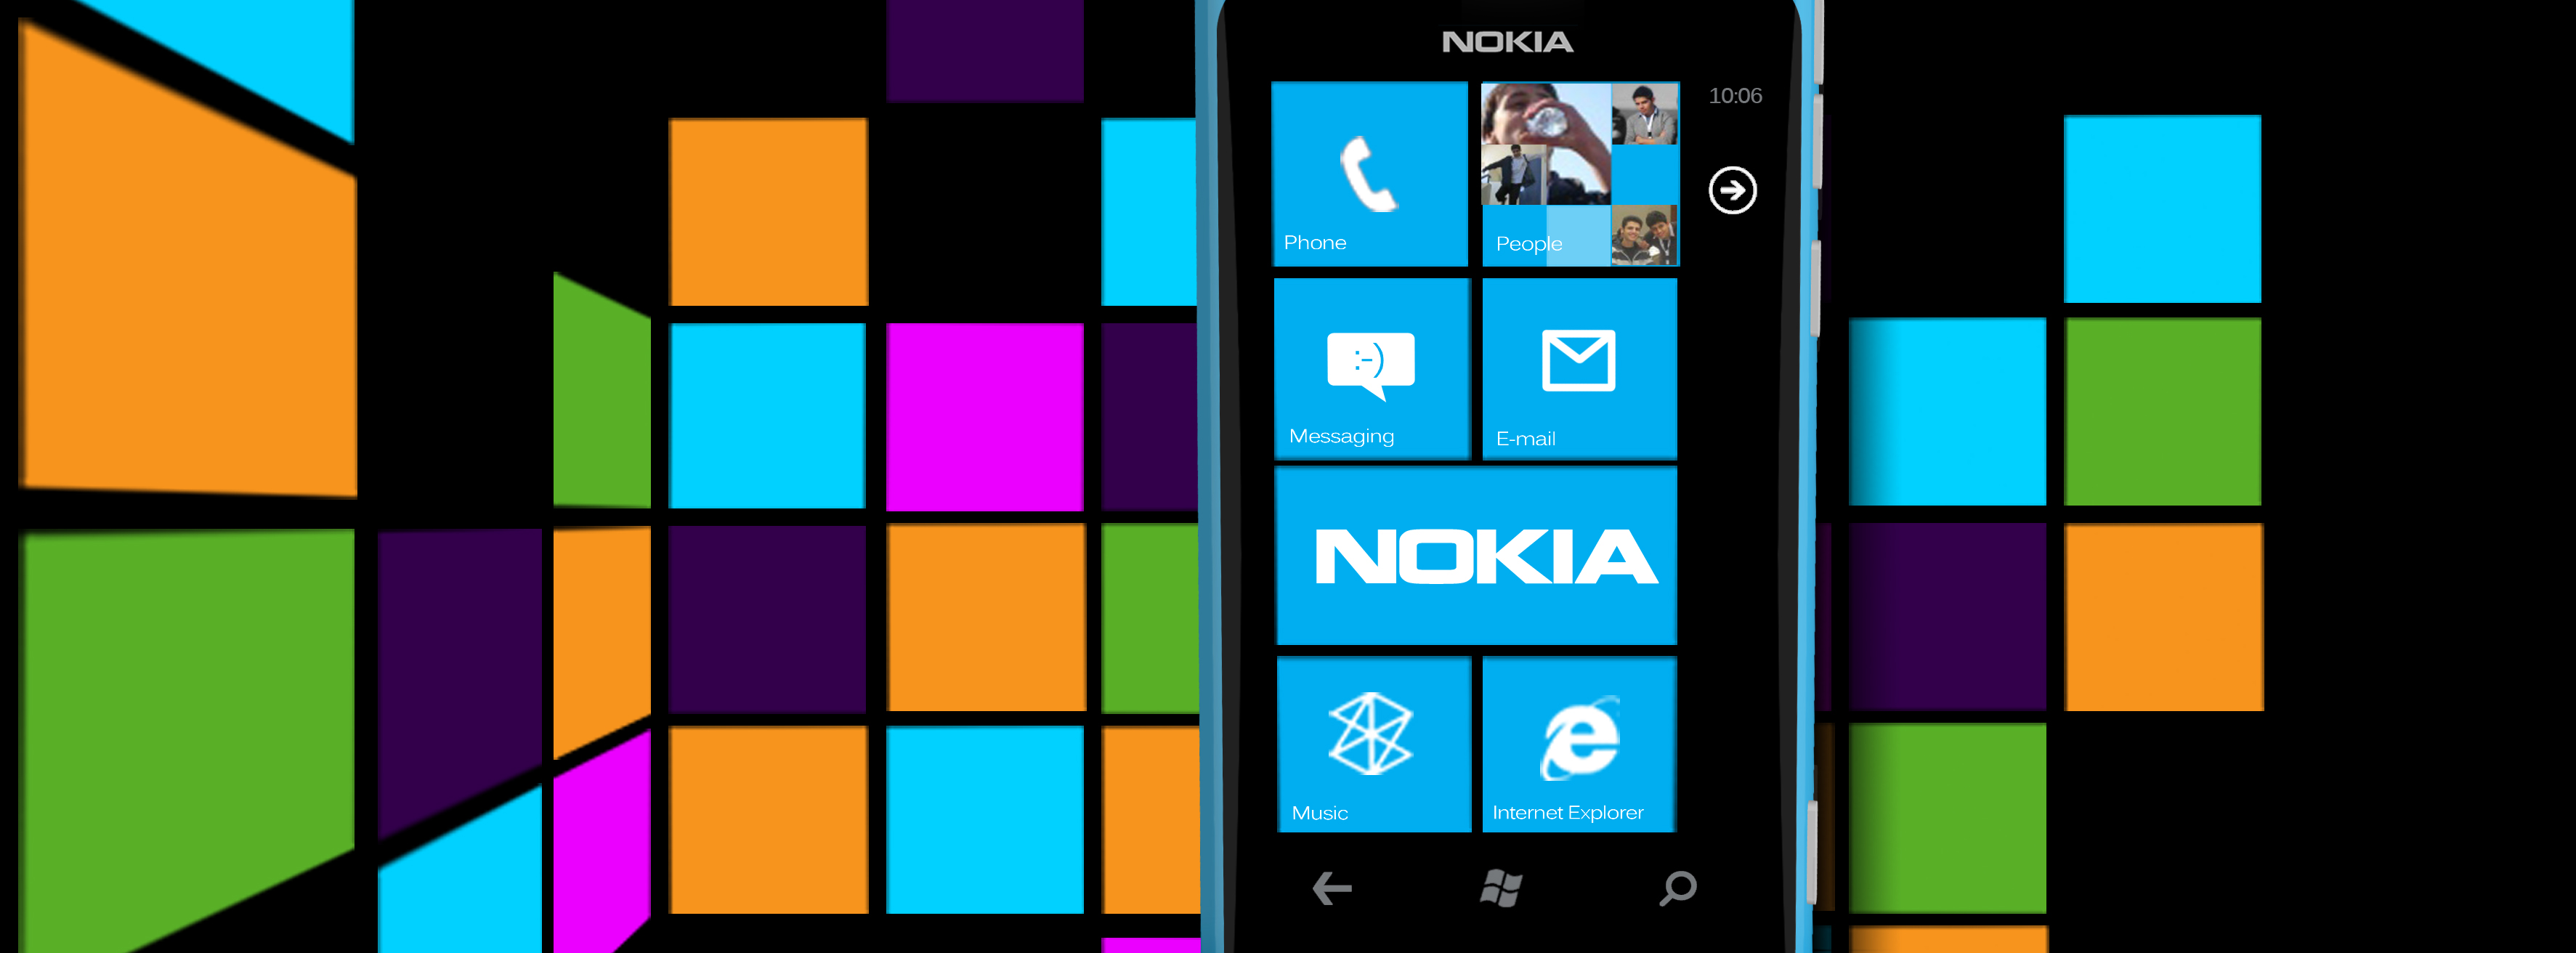 Nokia Lumia 800 Facebook Cover by islamruz on DeviantArt